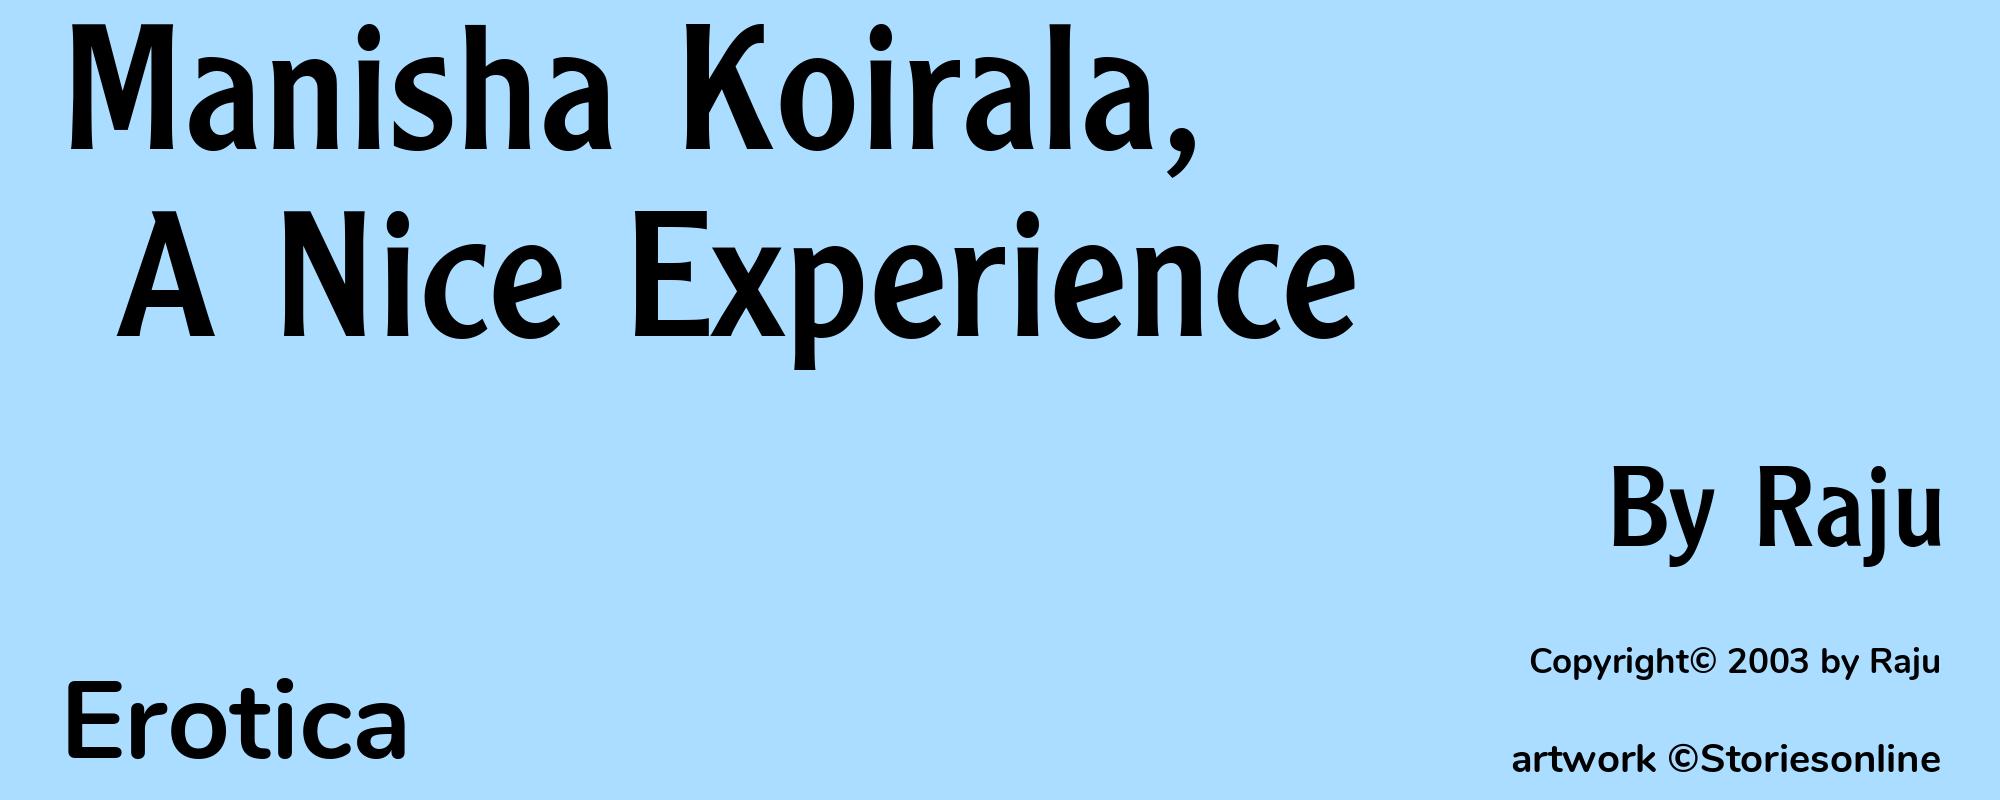 Manisha Koirala, A Nice Experience - Cover